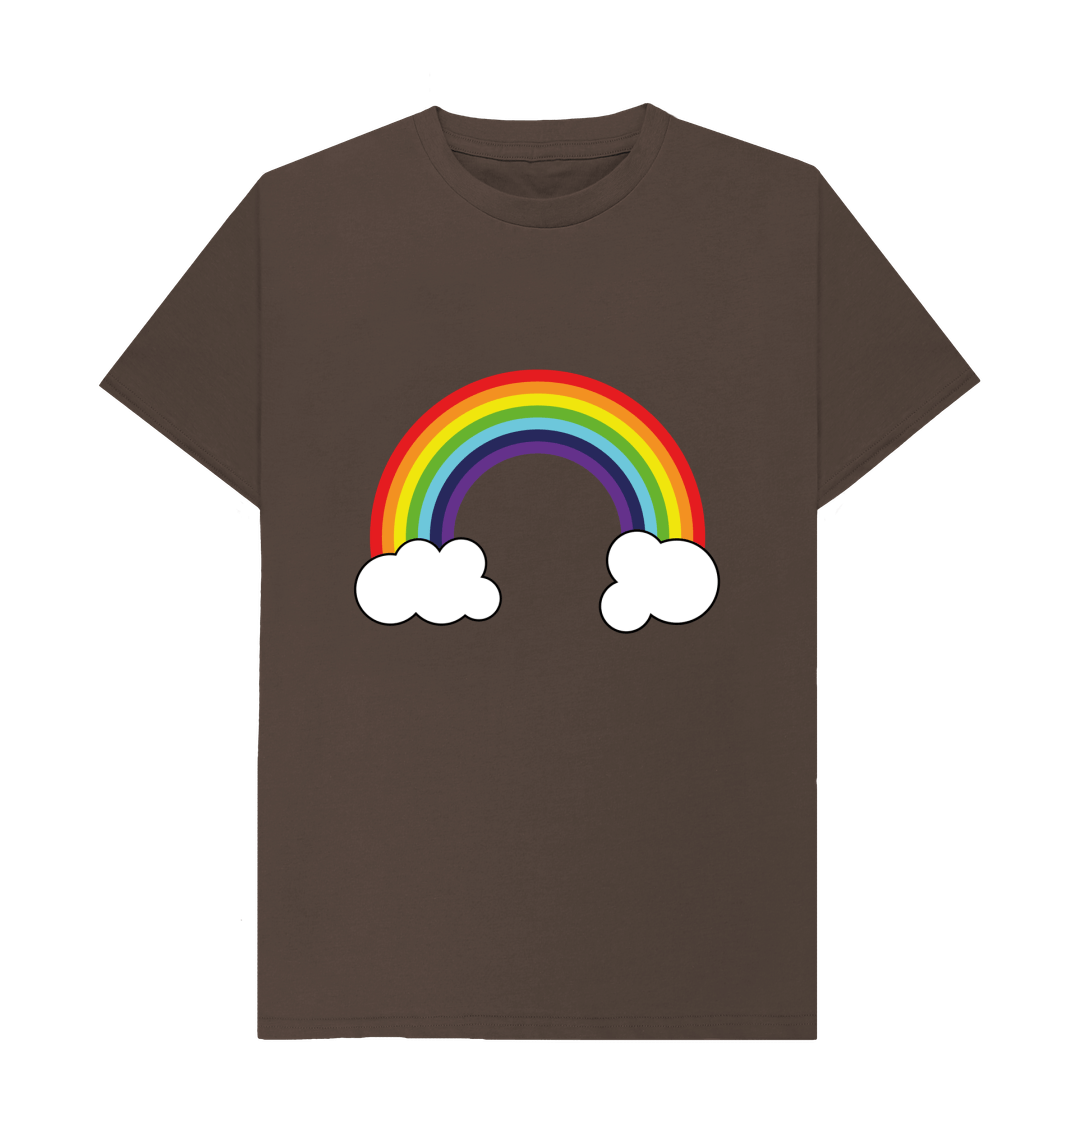 Chocolate Organic Cotton Rainbow Graphic Only Mental Health Men's T-Shirt